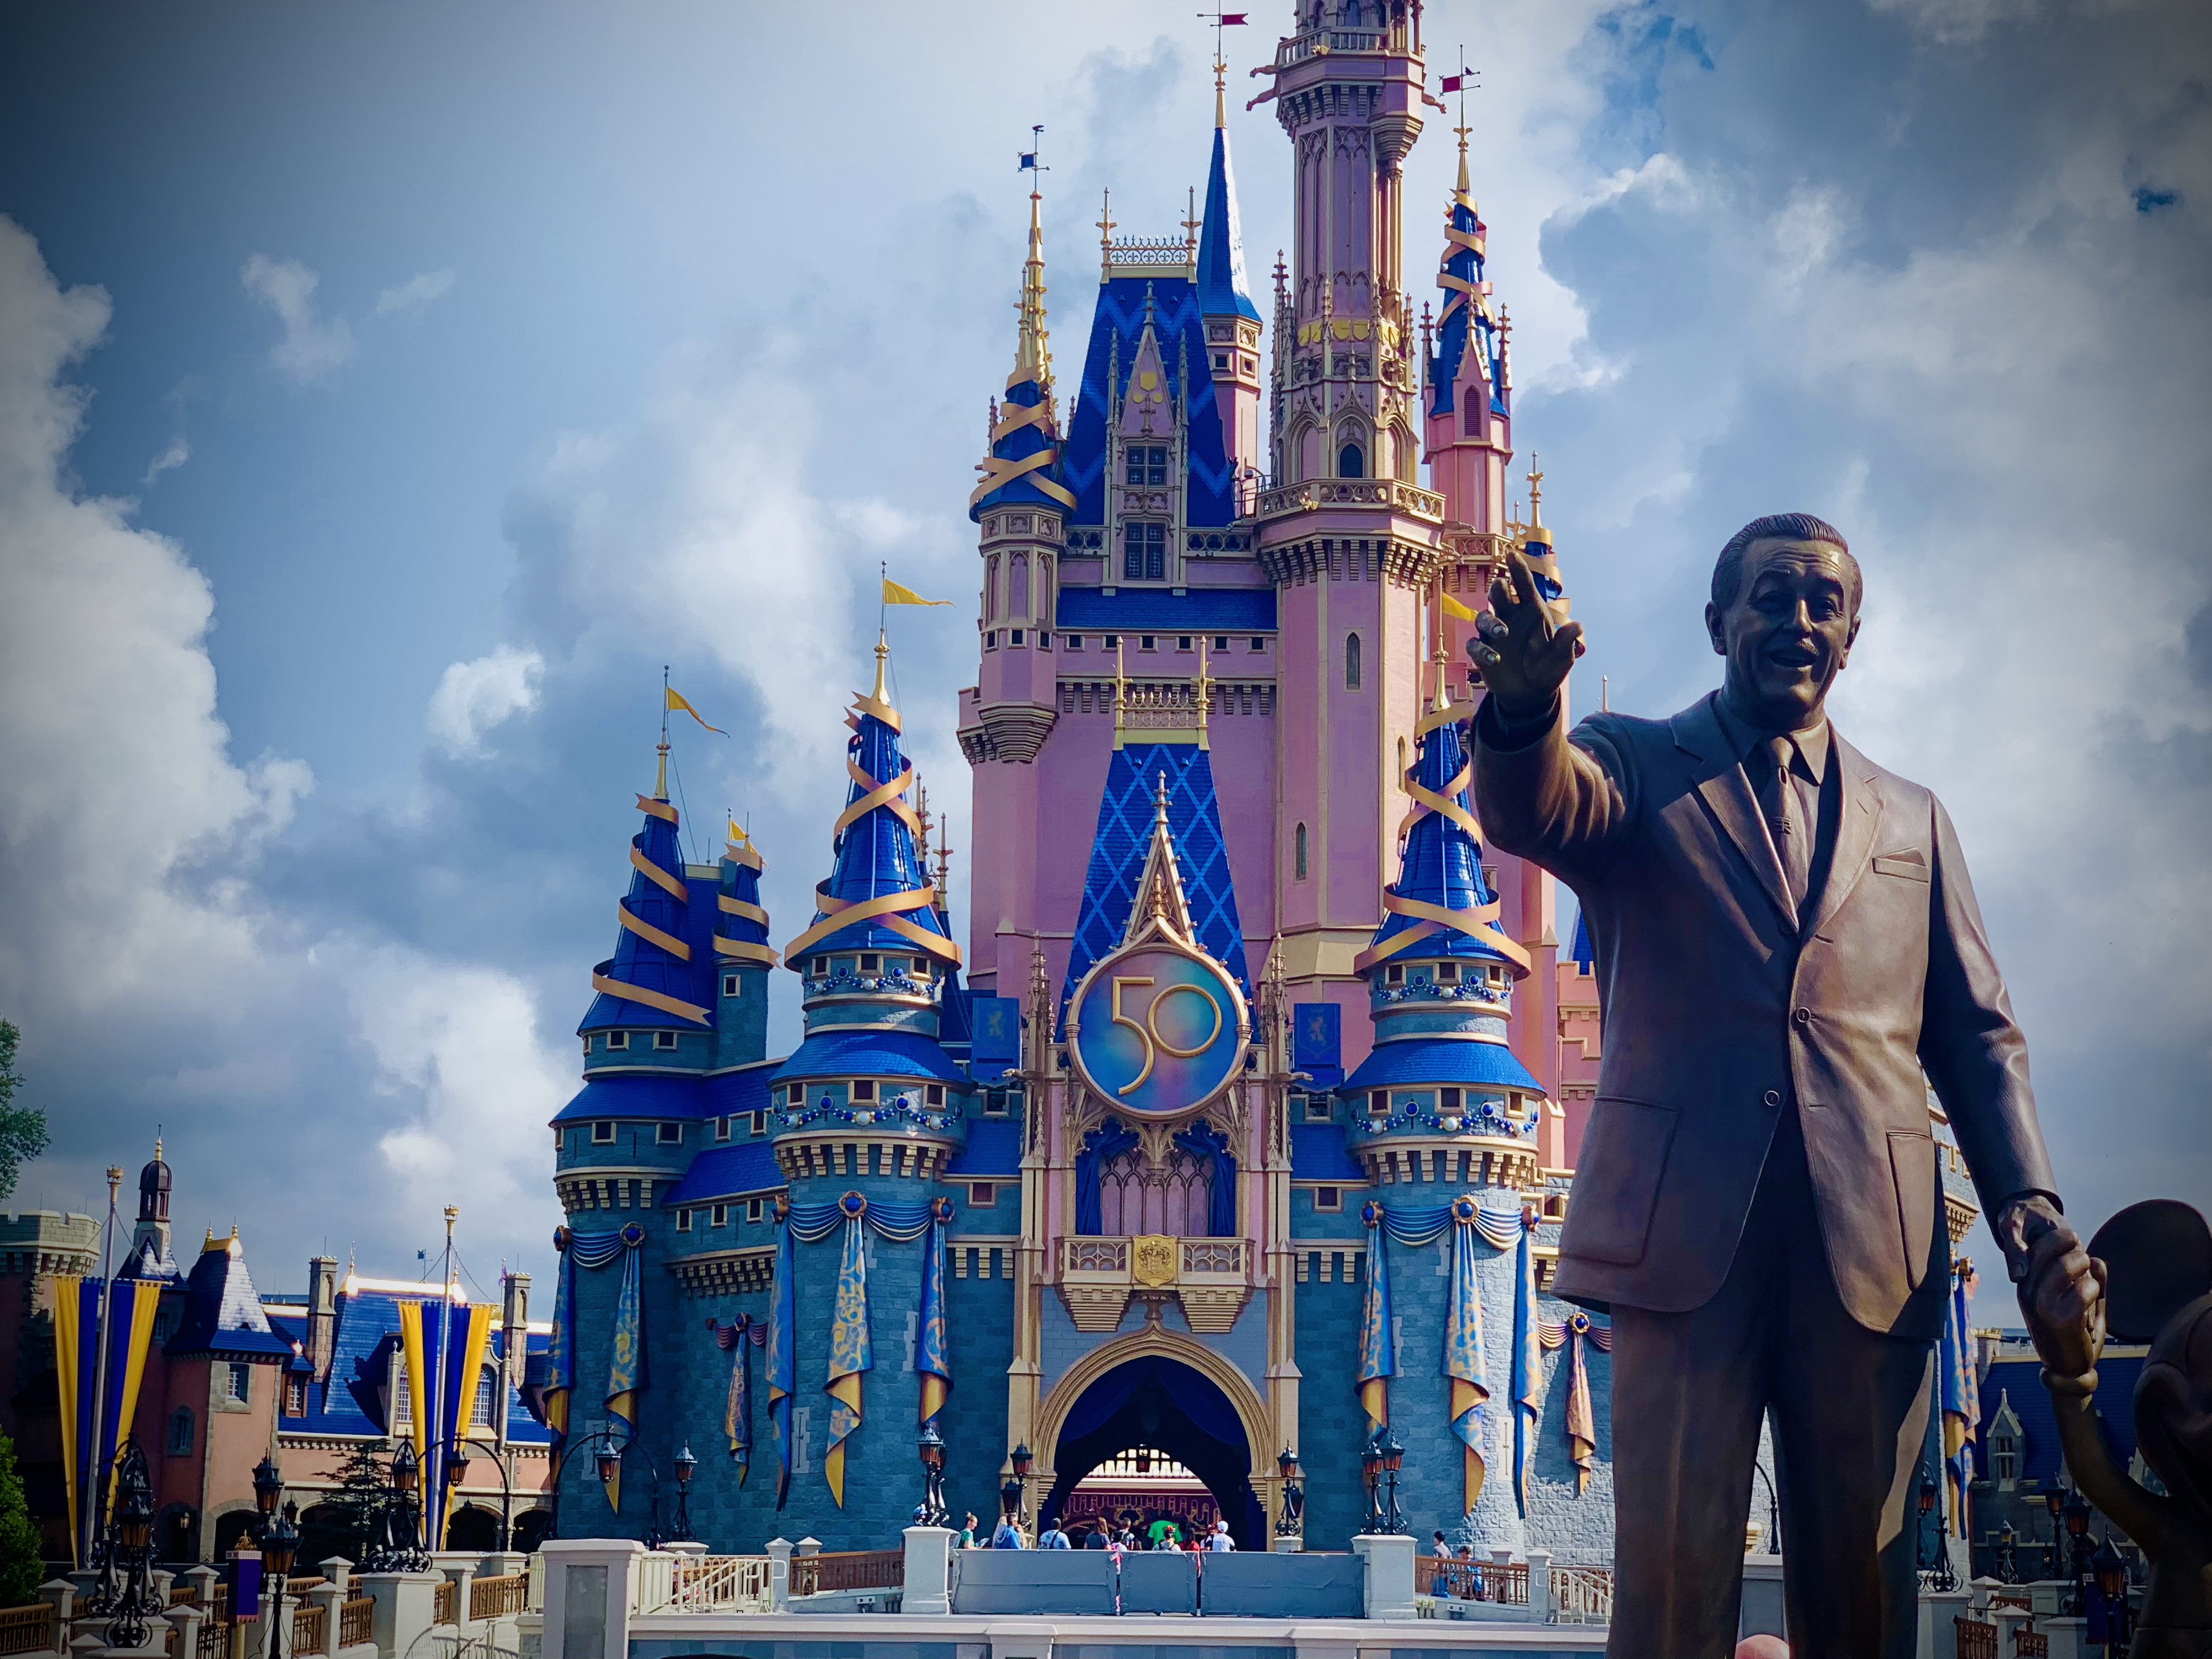 Hello 50: Disney adds celebratory crest to Cinderella Castle